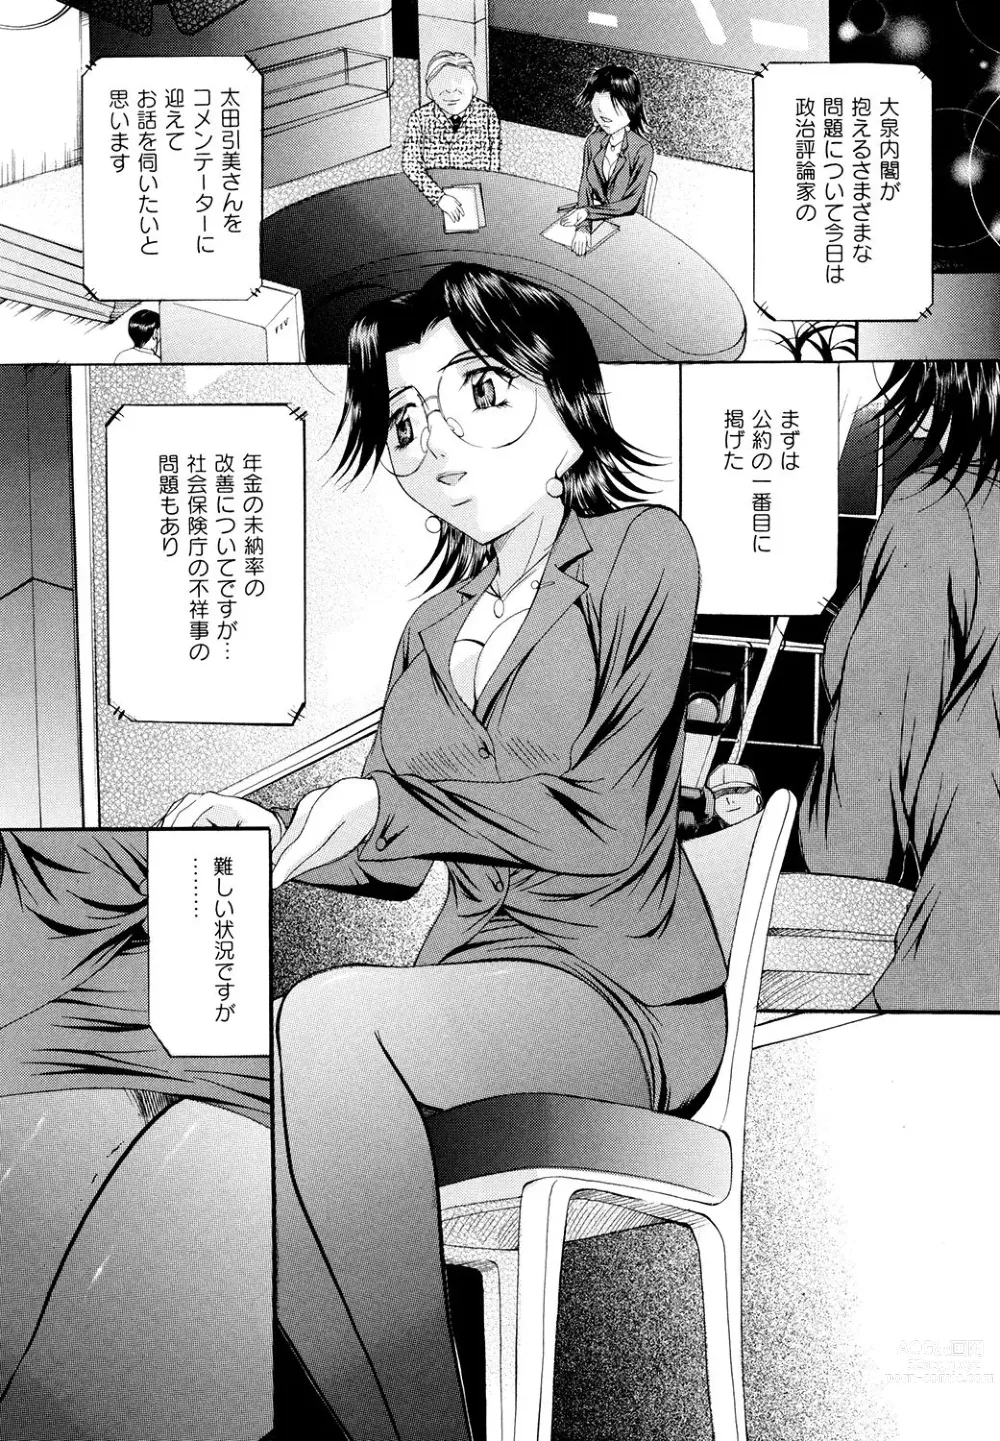 Page 143 of manga Kyonyuu Korogashi